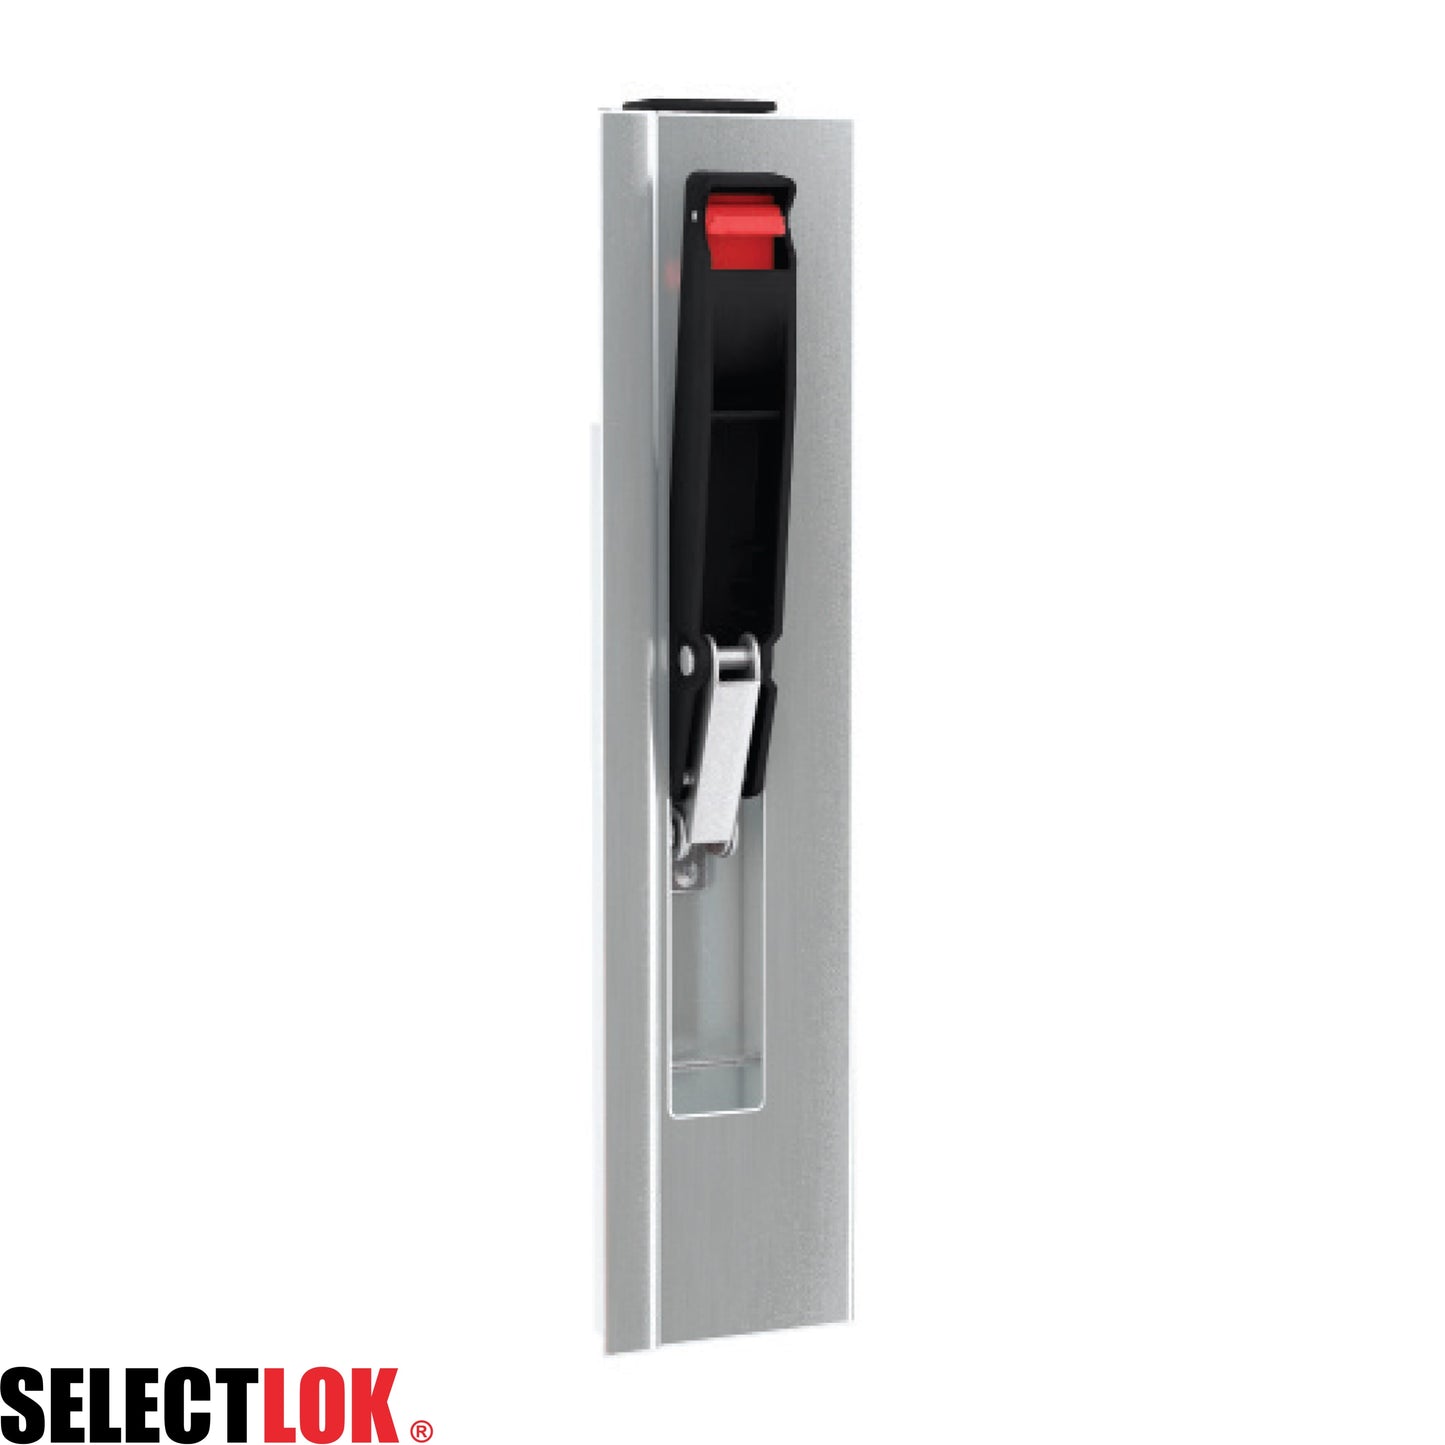 Utility Flush Lock Kit - Selectlok